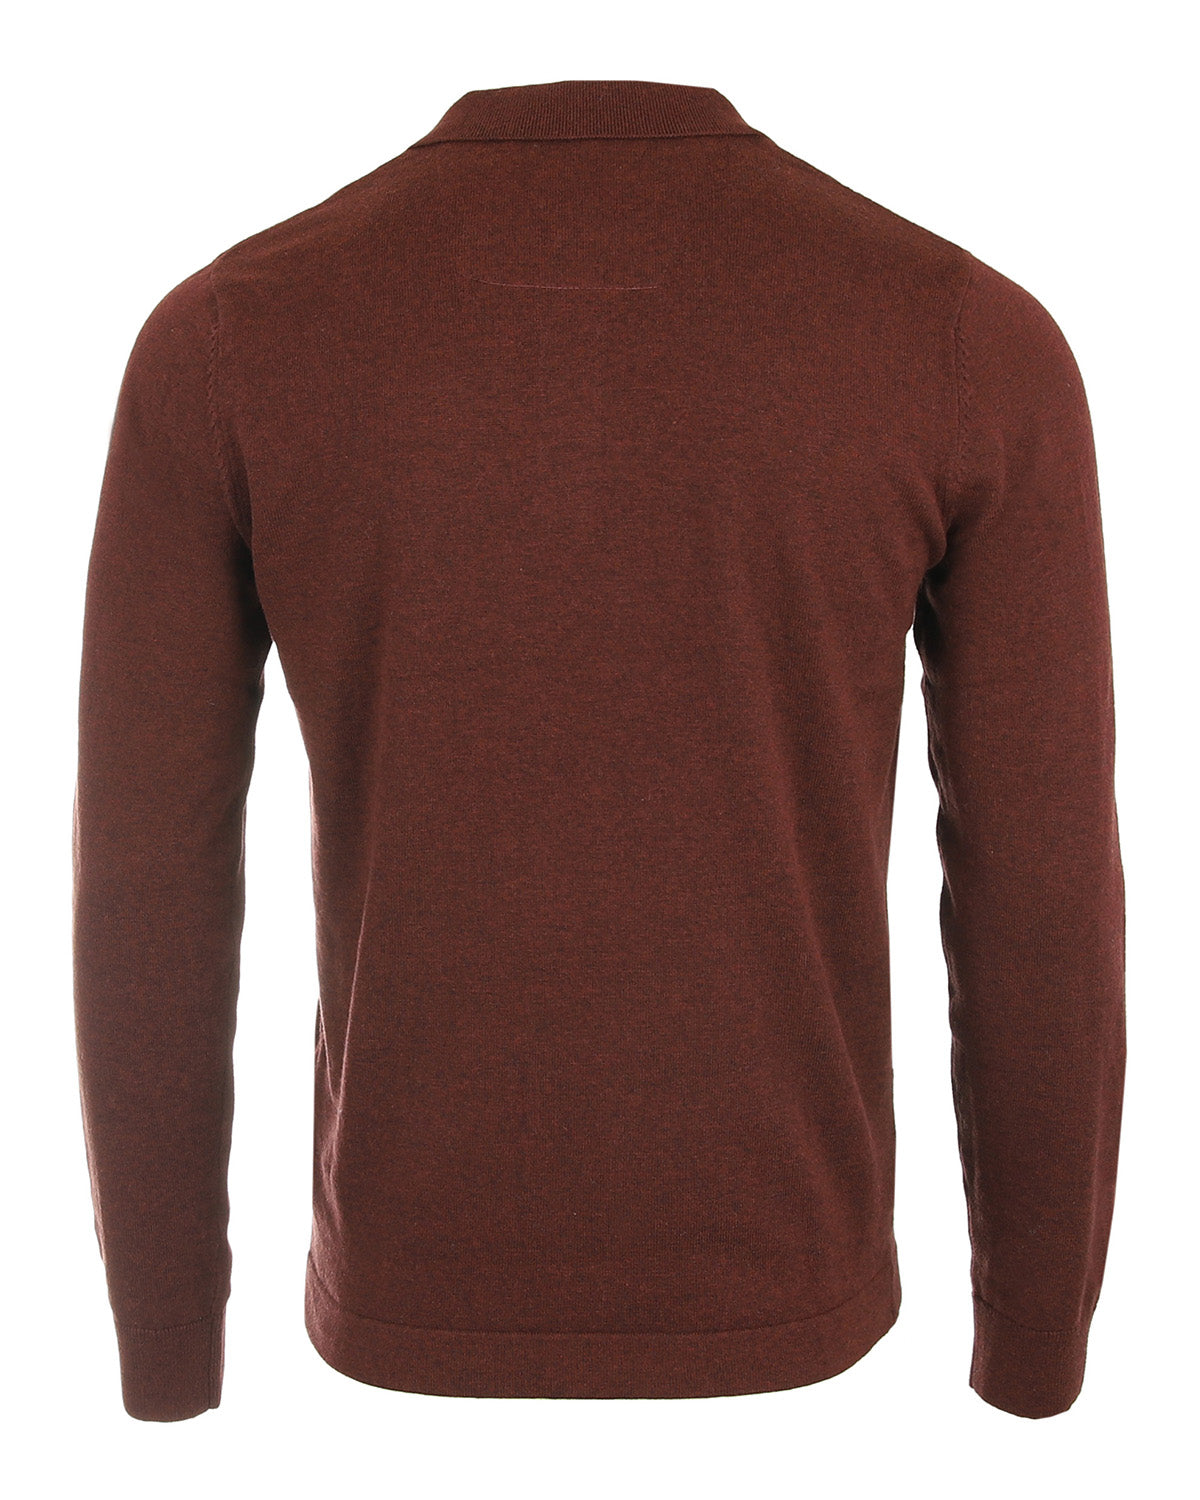 TEEK - Maroon Mens Casual Polo Sweater - Long Sleeve SWEATER TEEK M   